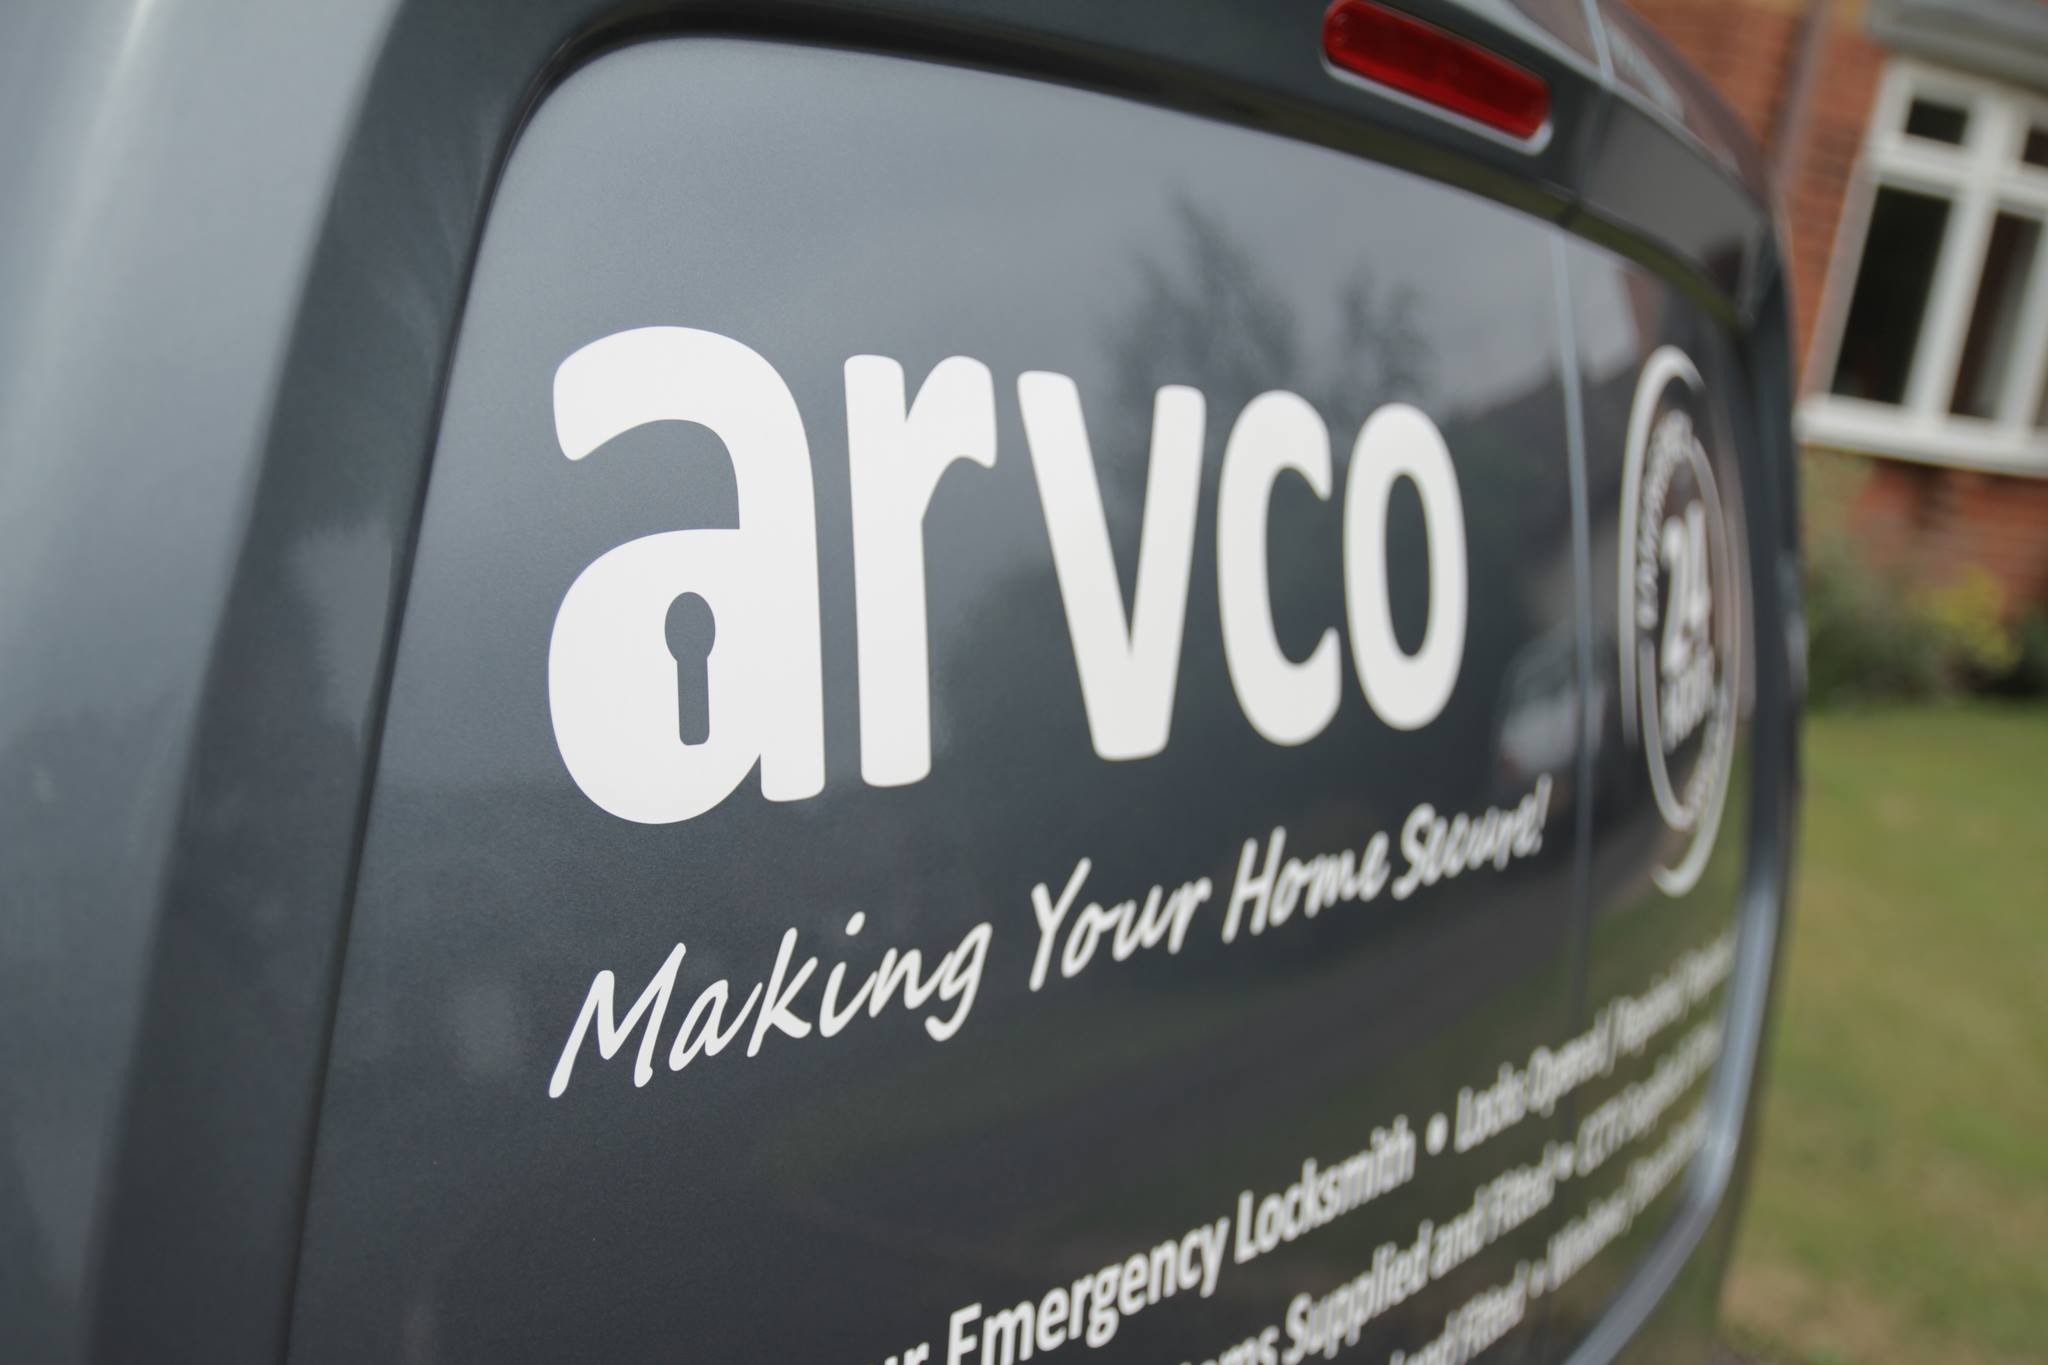 Main photo for ARVCO Locksmith Services Wolverhampton